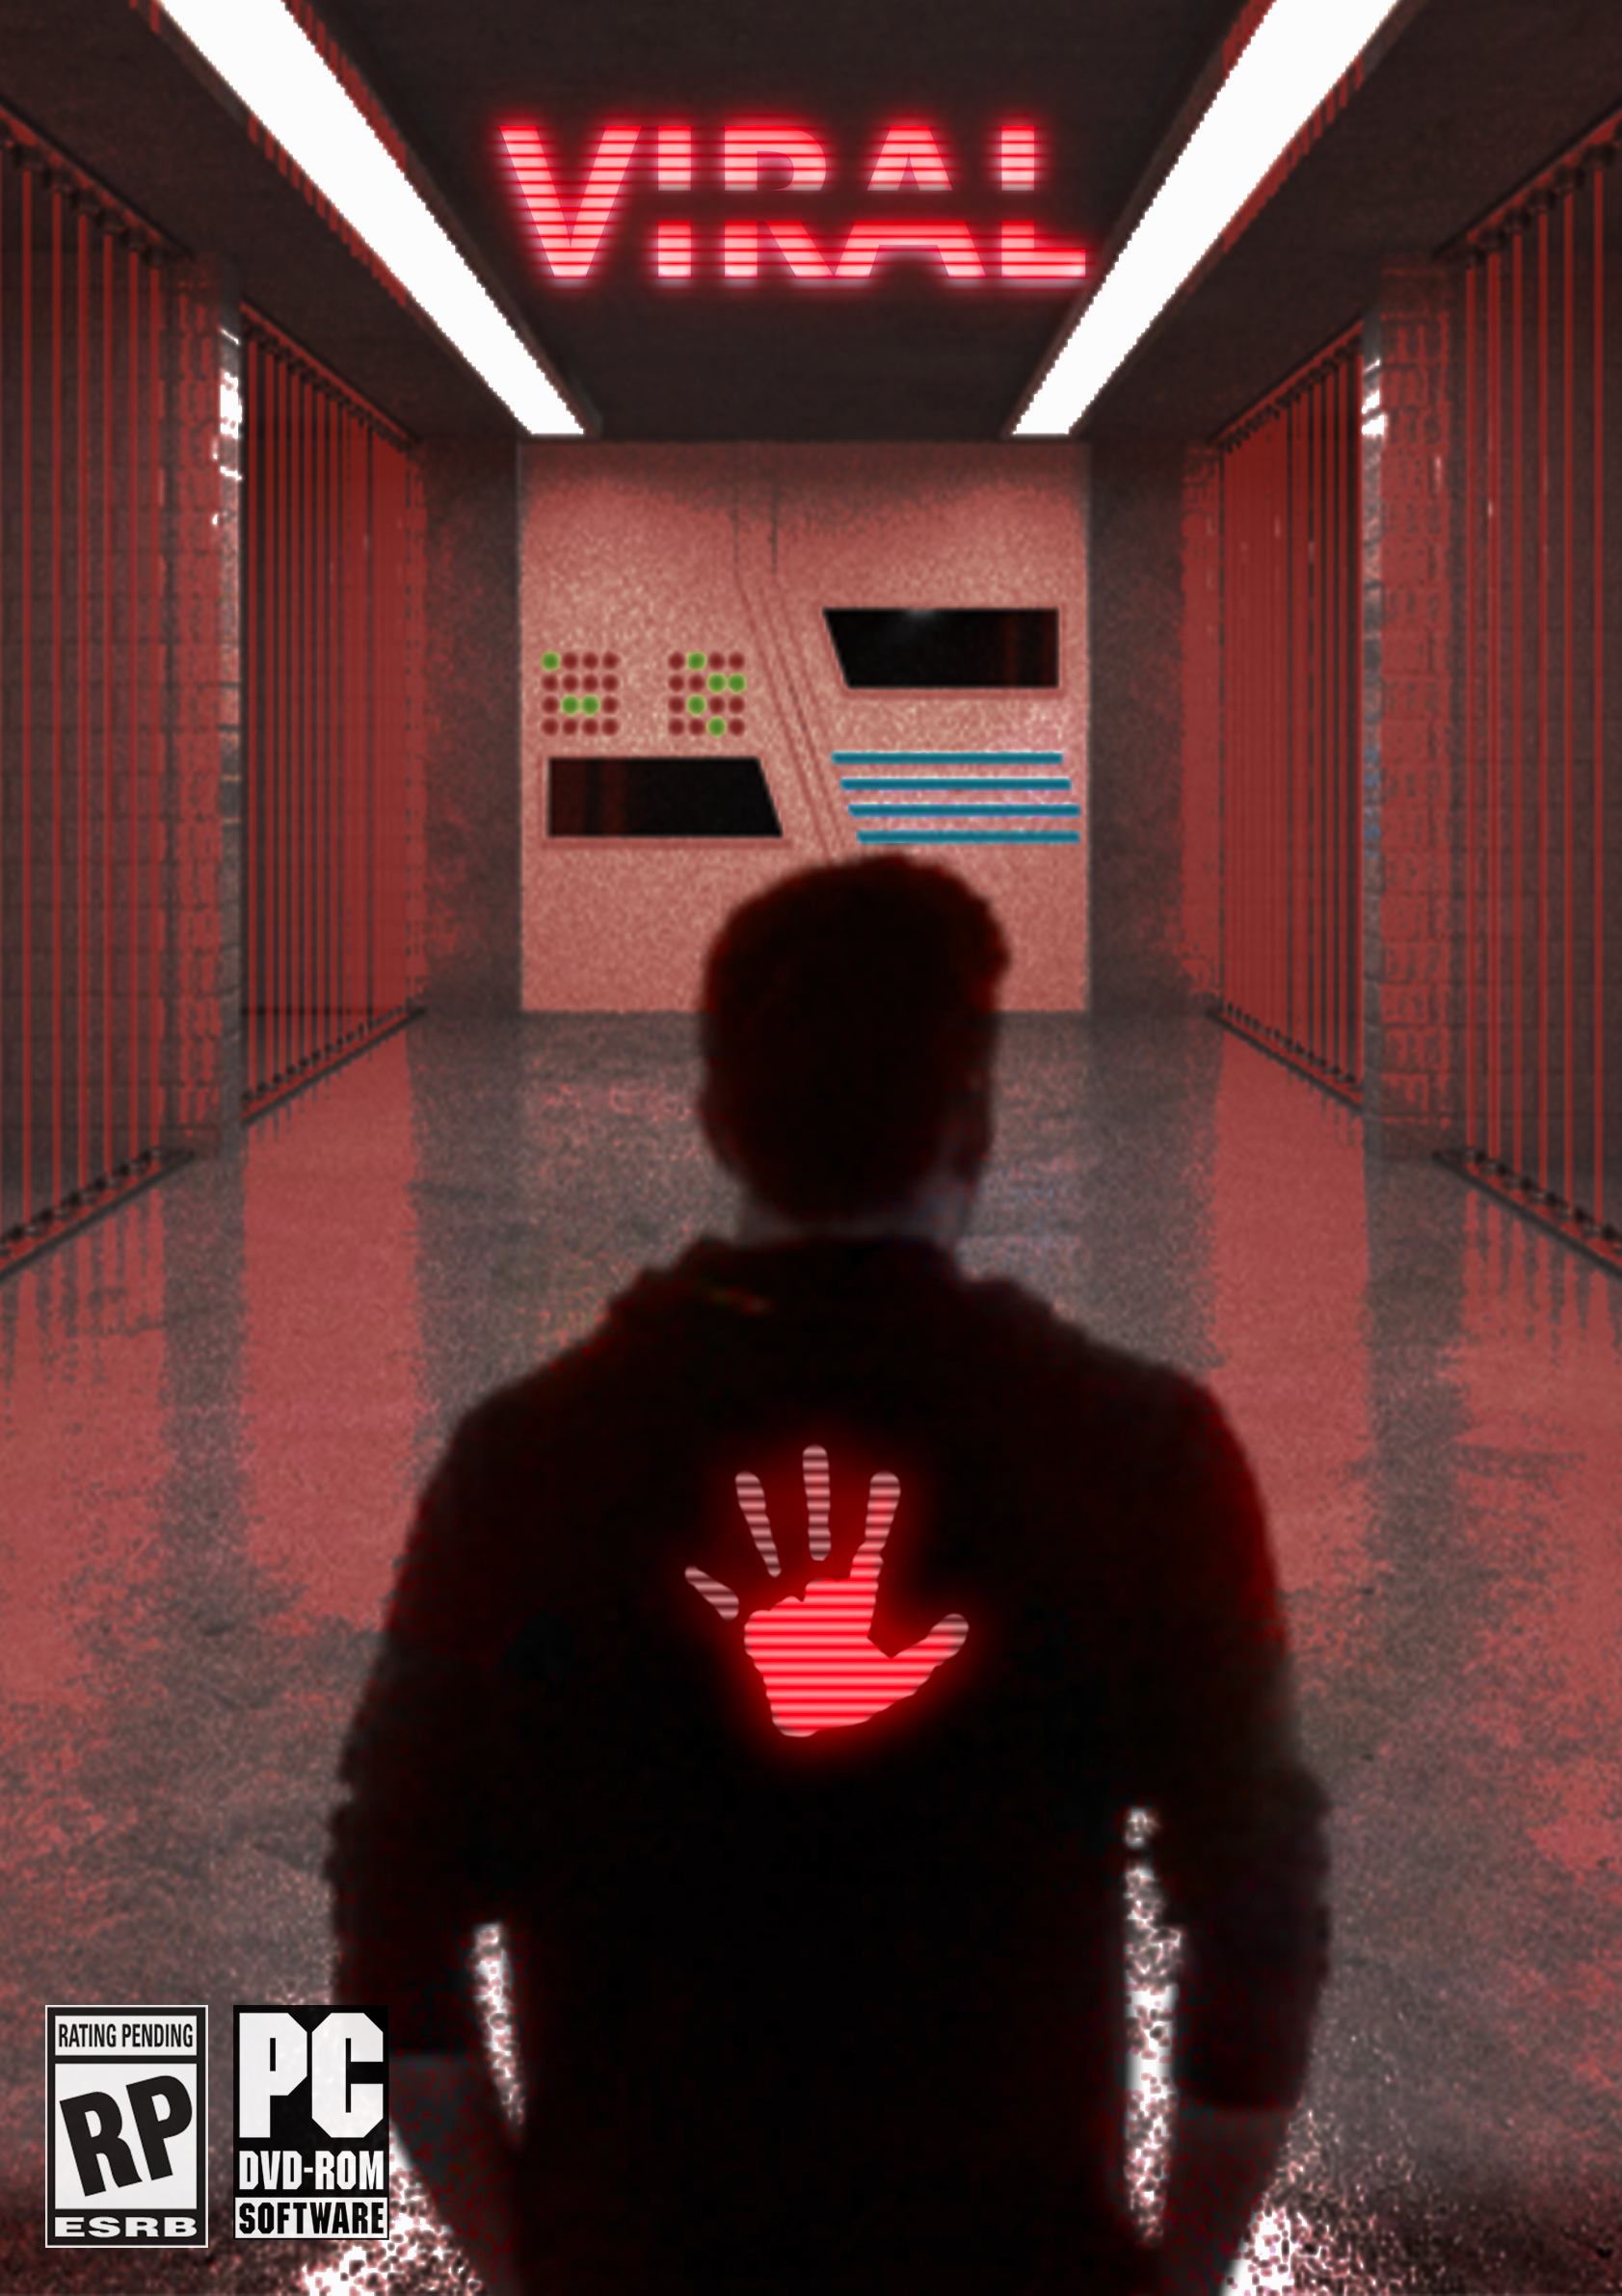 Promotional render of a disk case